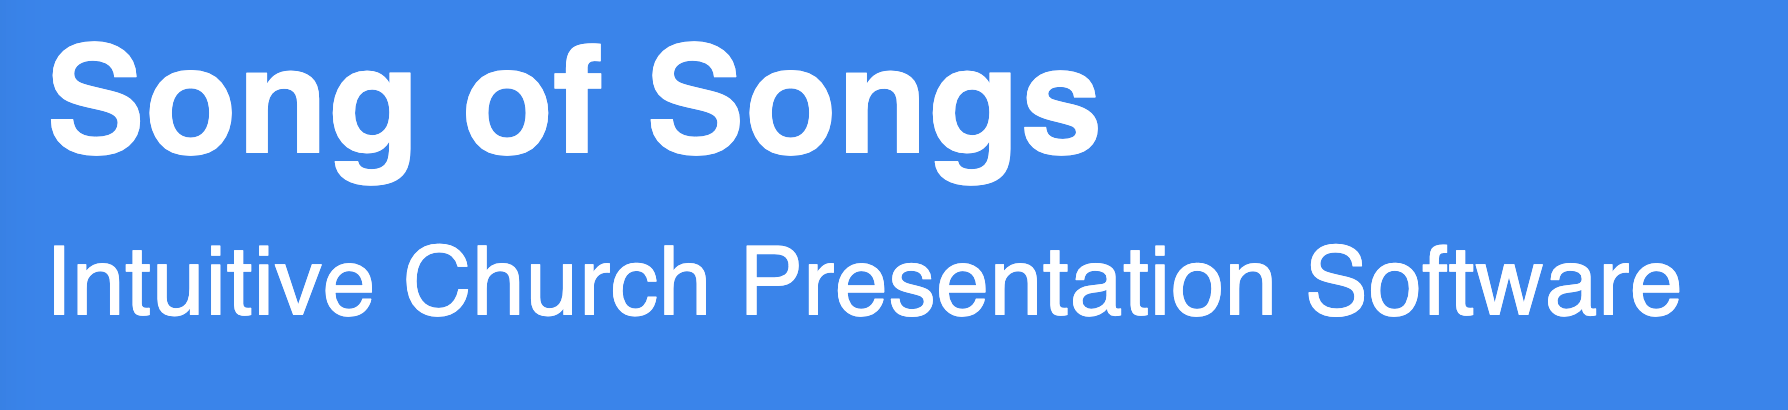 church song presentation software free